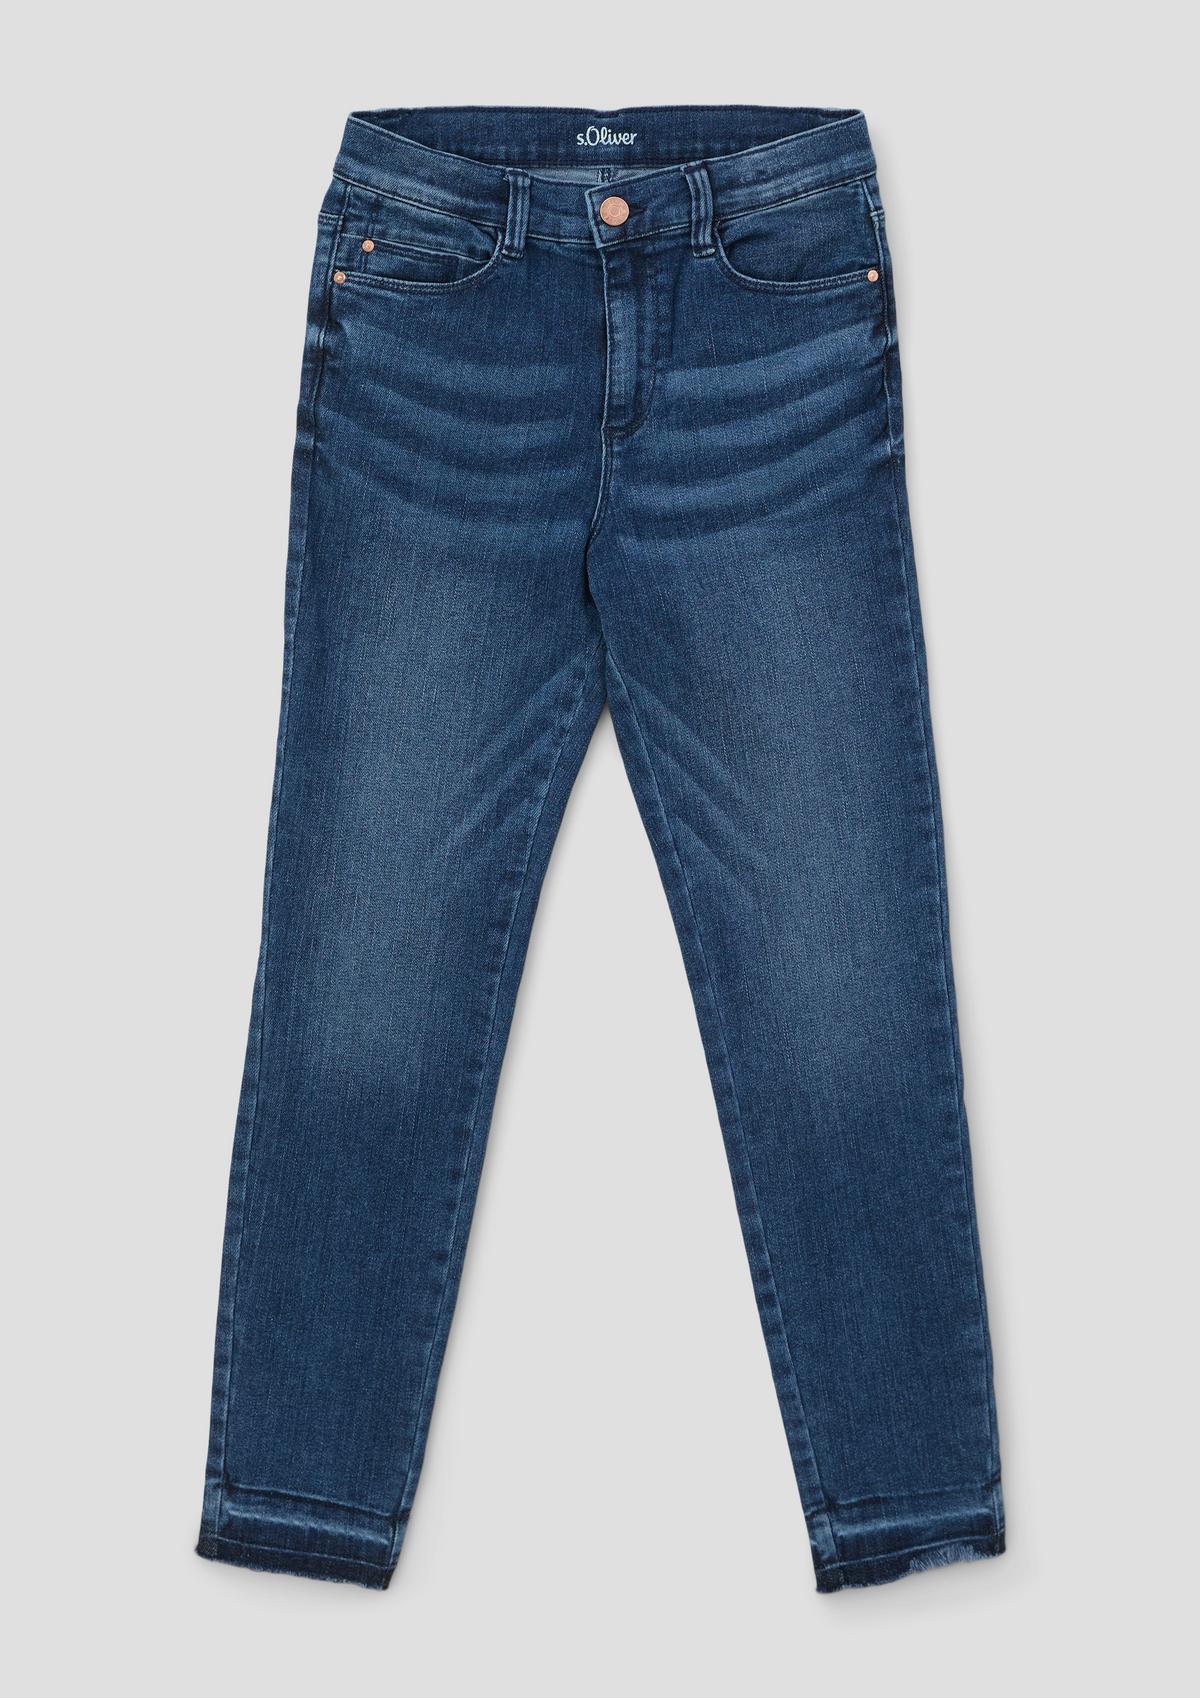 s.Oliver Ankle Jeans Suri / Regular Fit / Mid Rise / Slim Leg 